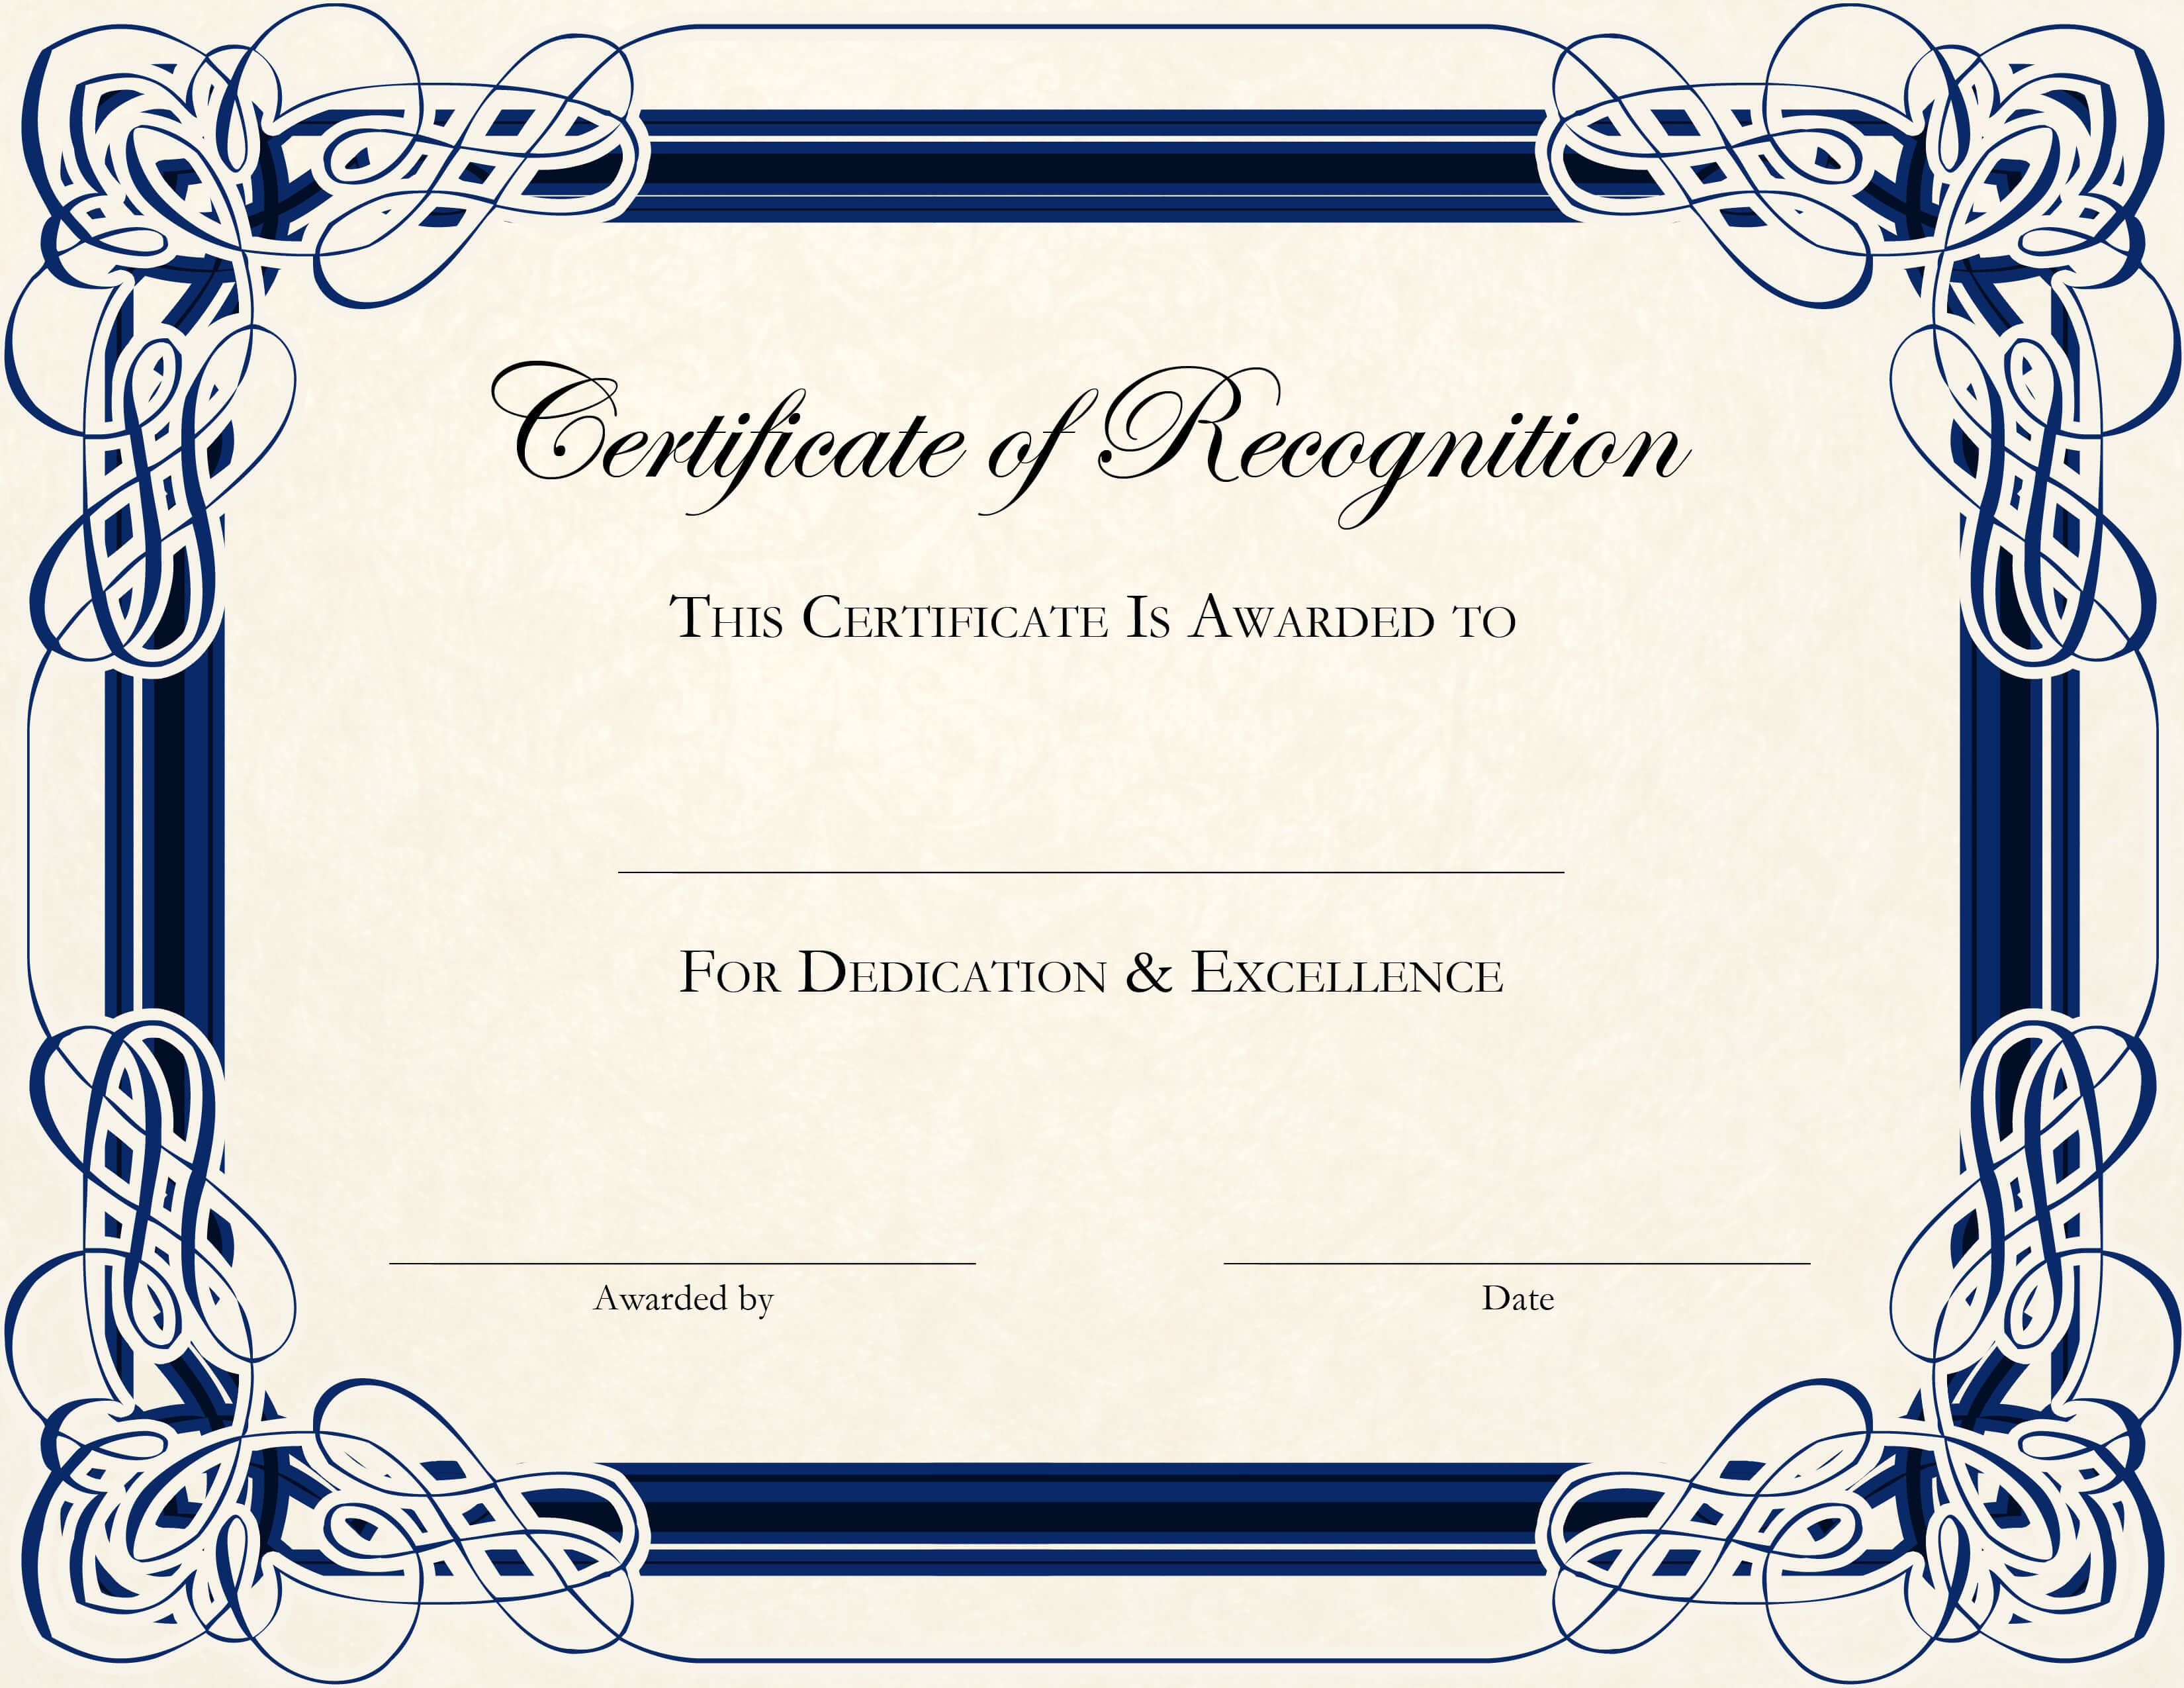 Certificate Template Designs Recognition Docs | Certificate In Free Template For Certificate Of Recognition